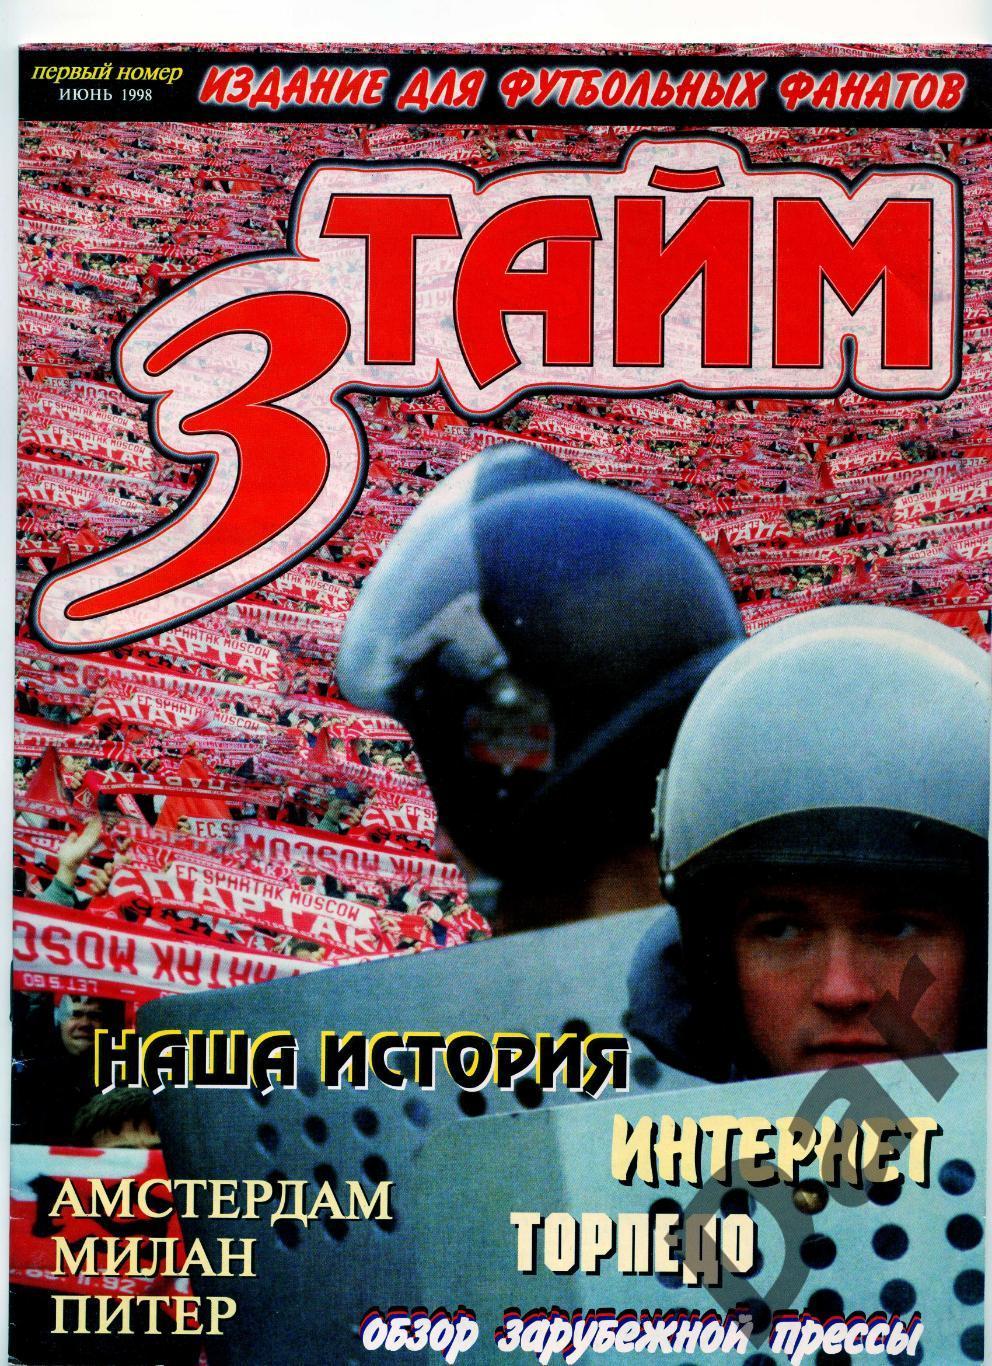 Фанзин 3 тайм (Спартак Москва) 1998